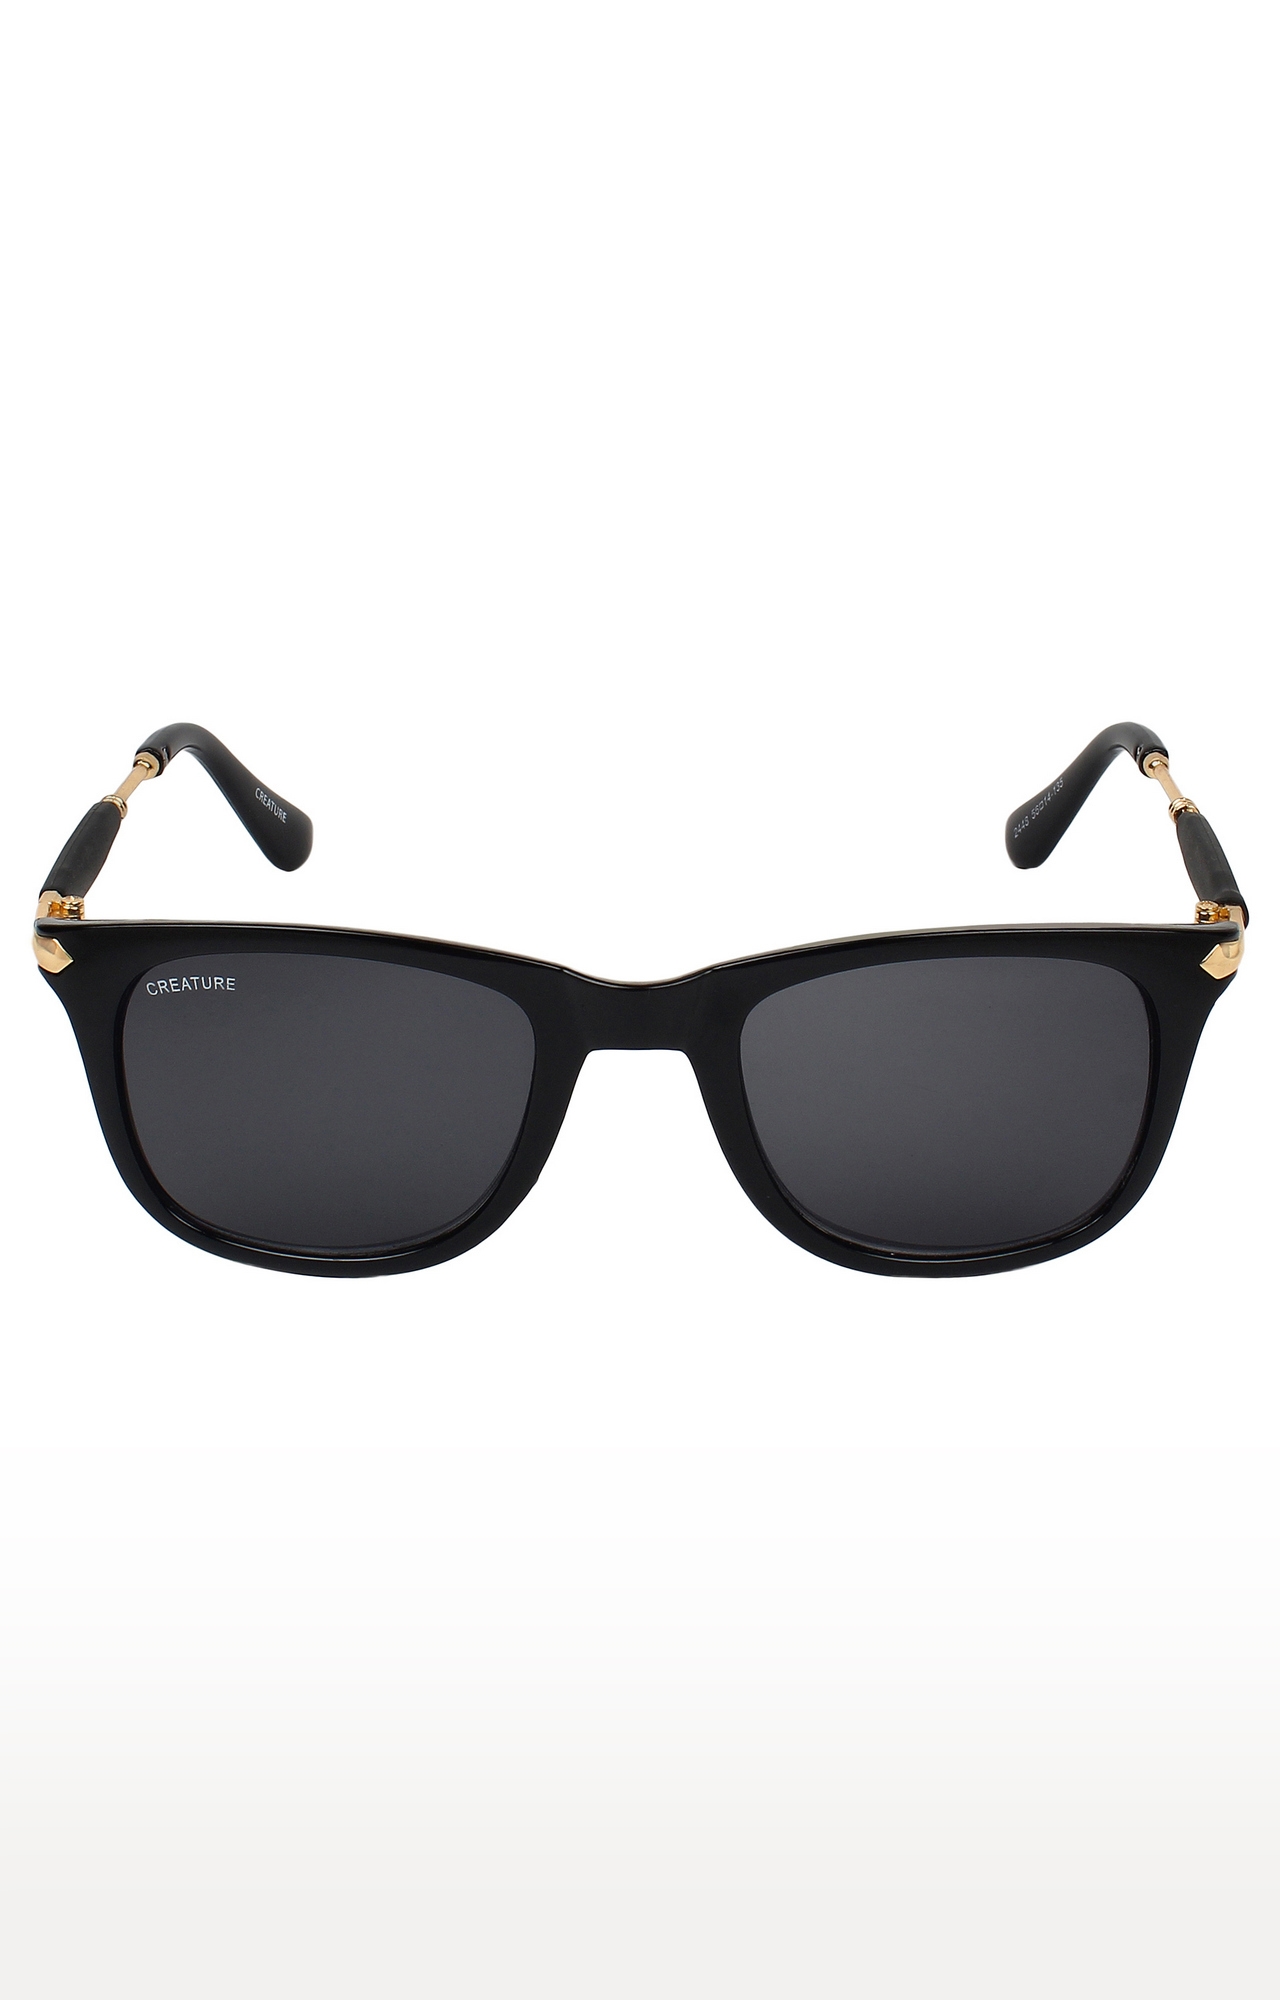 CREATURE | CREATURE Black Gloss Finish UV Protected Unisex Sunglasses (Lens-Black|Frame-Black) 2